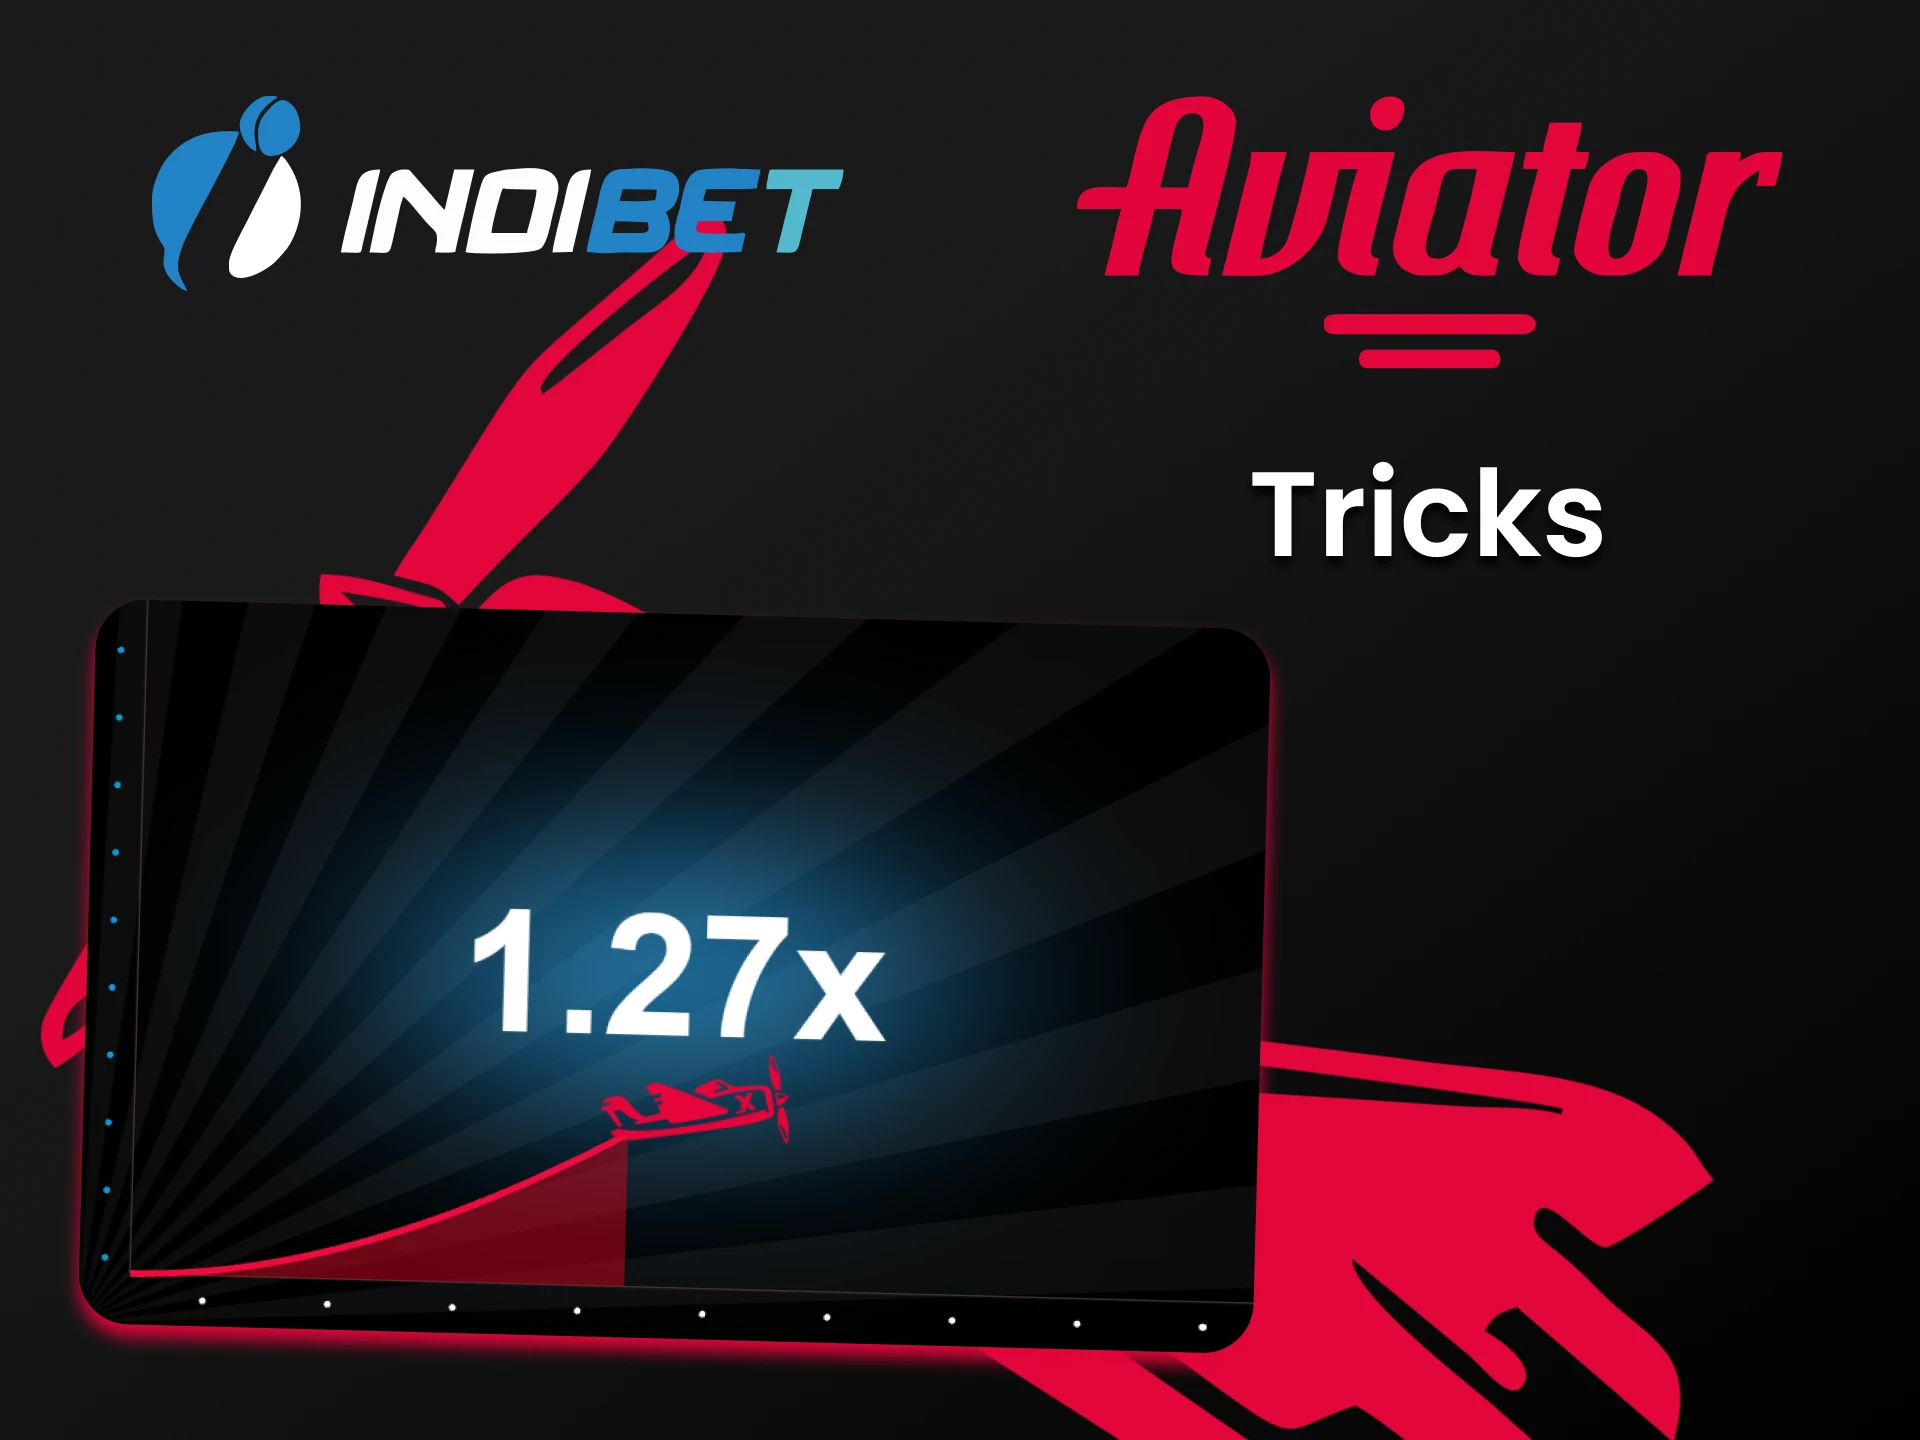 Learn the tactics for winning Aviator on Indibet.